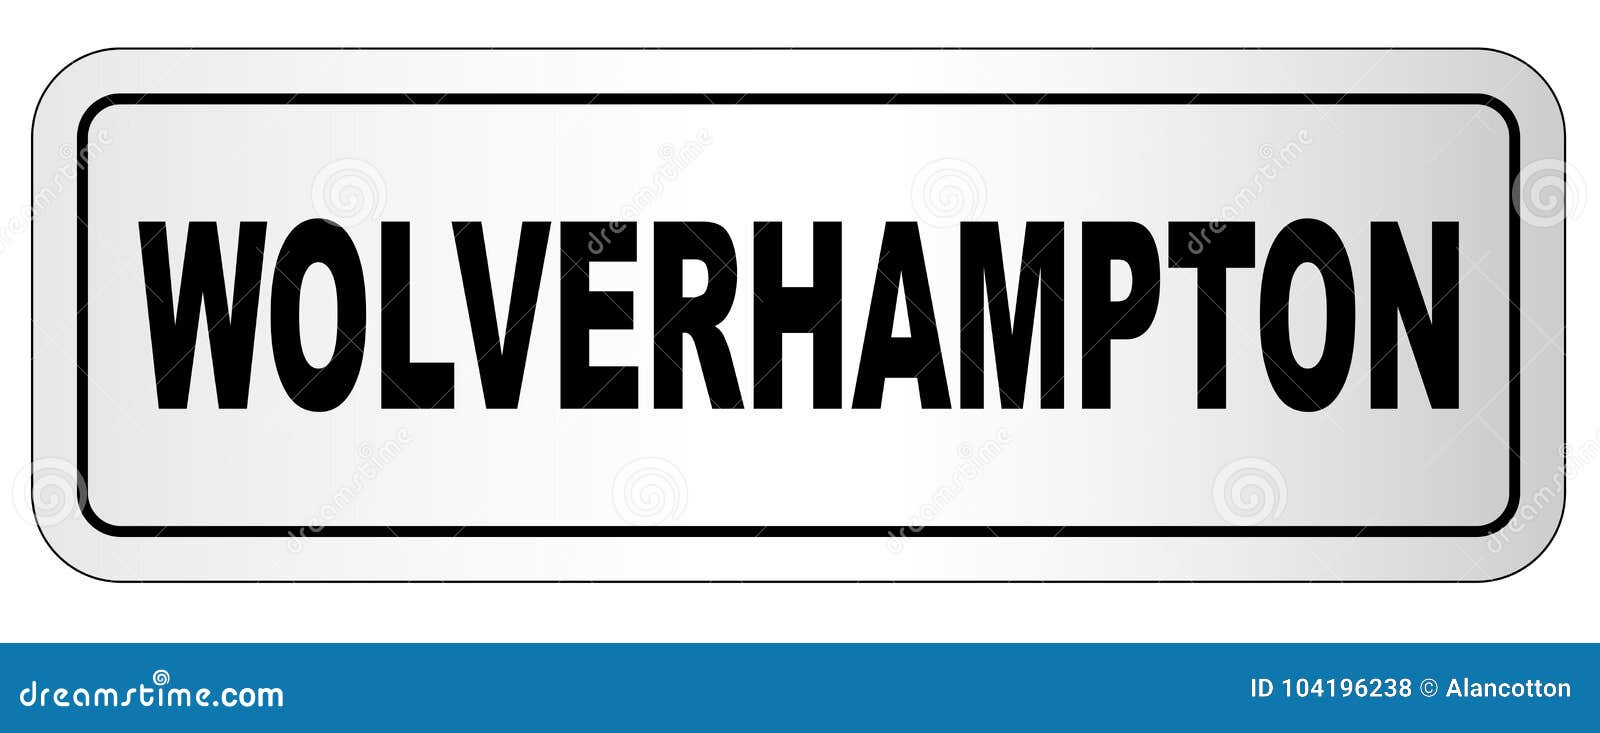 wolverhampton city nameplate